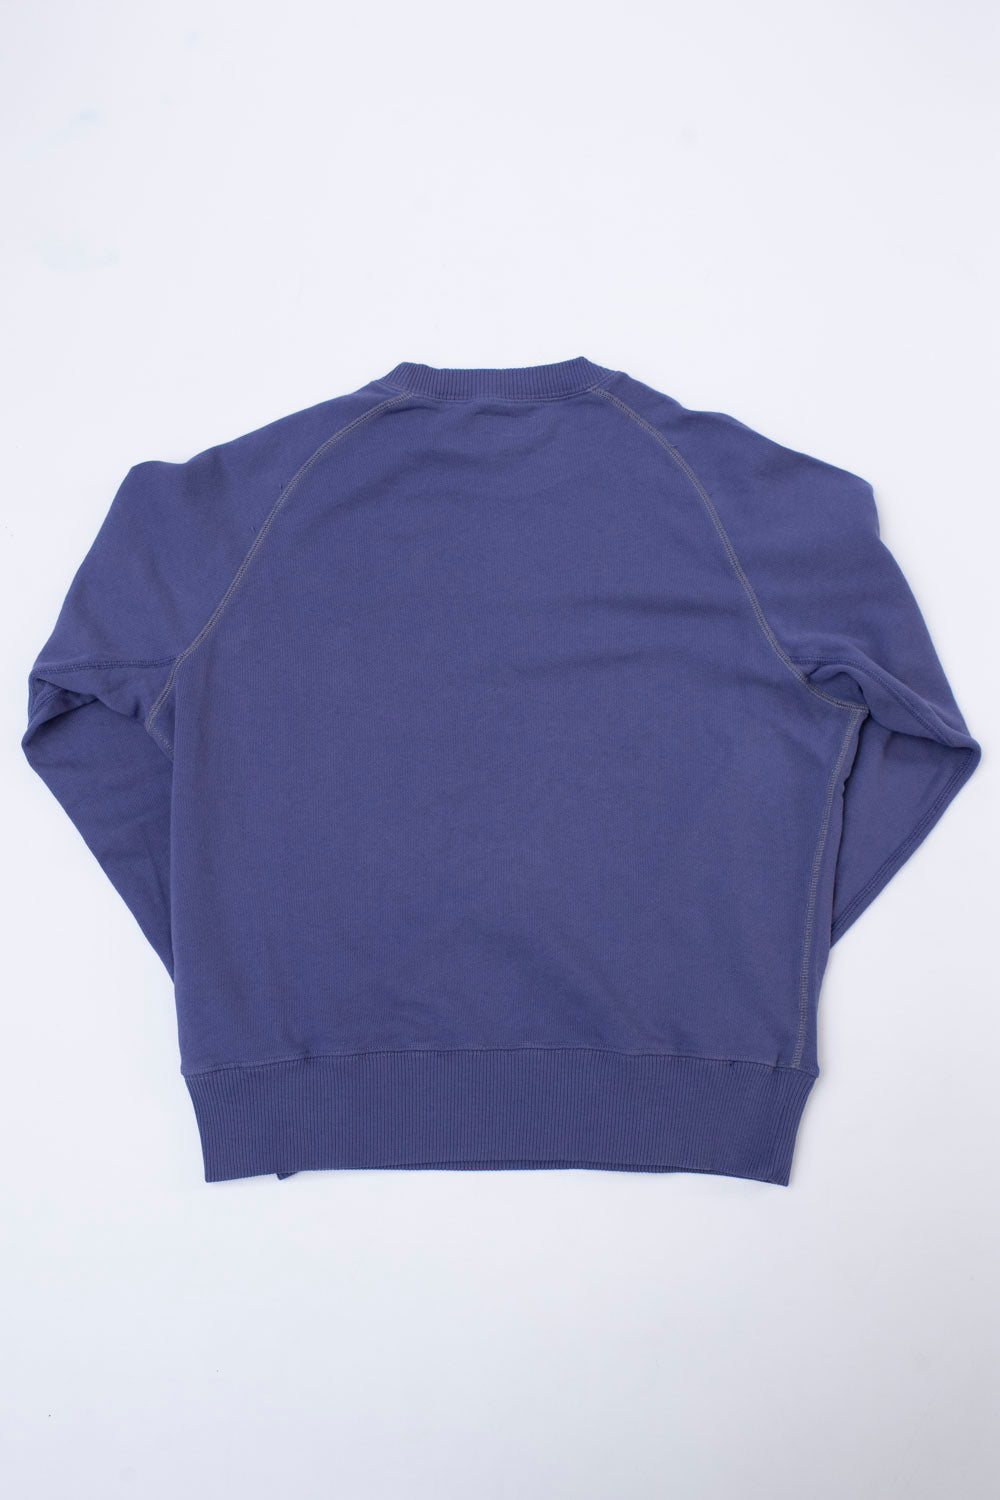 RGSW01.504 - 10.6oz Organic Cotton Sweatshirt Relaxed Fit - Purple Blue